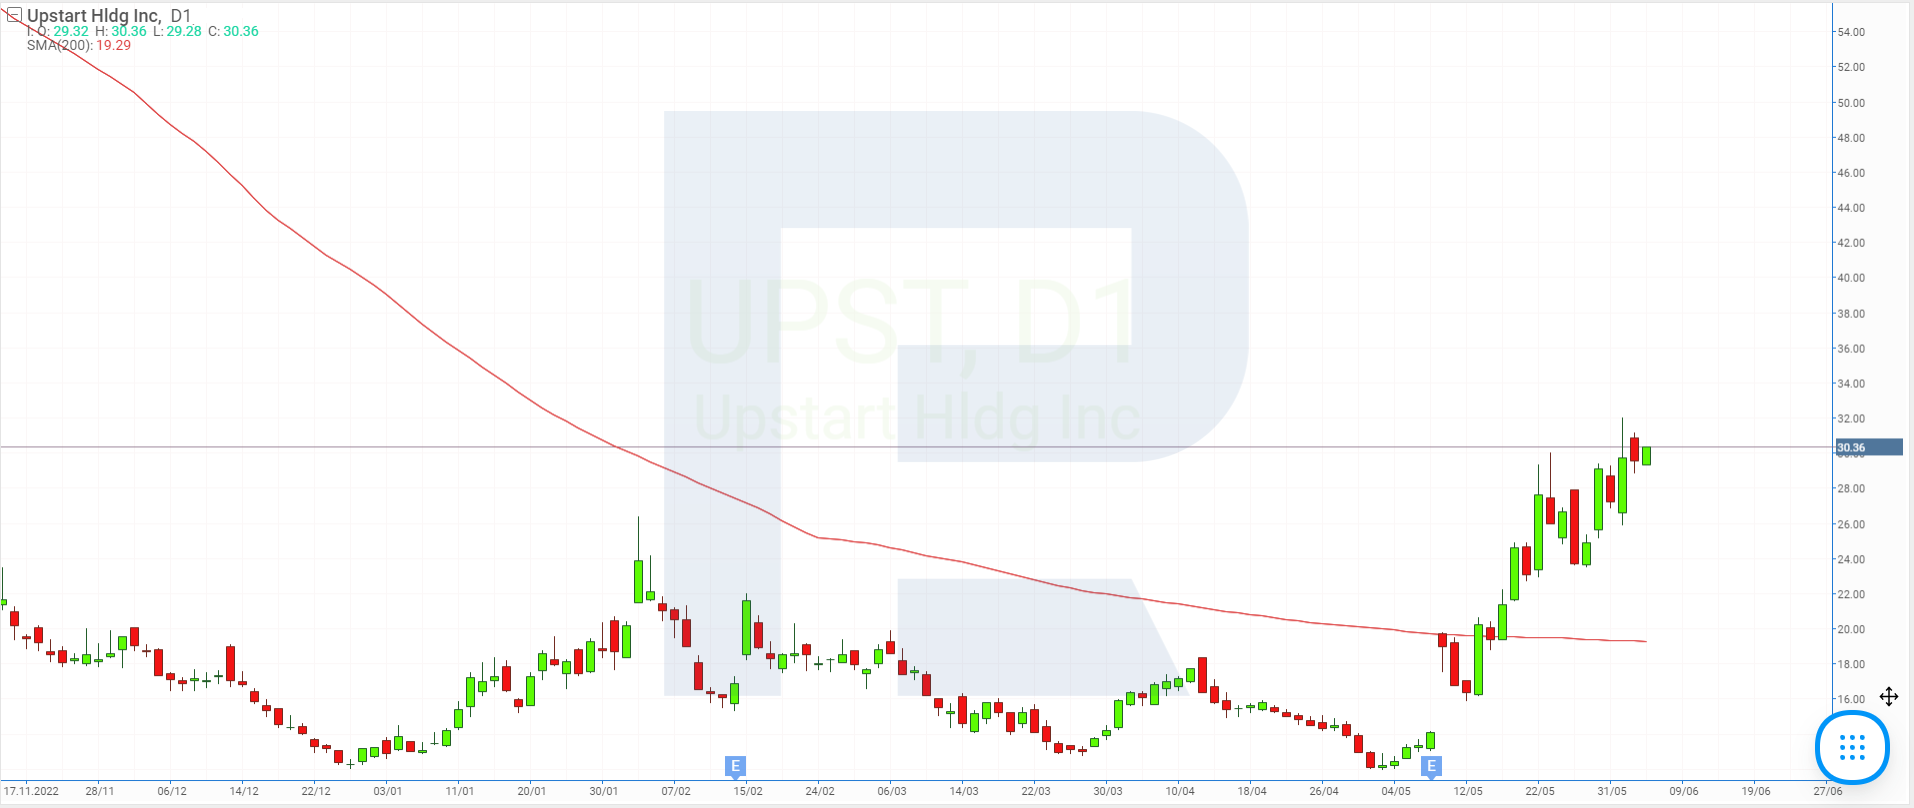 Stock price chart of Upstart Holdings Inc.